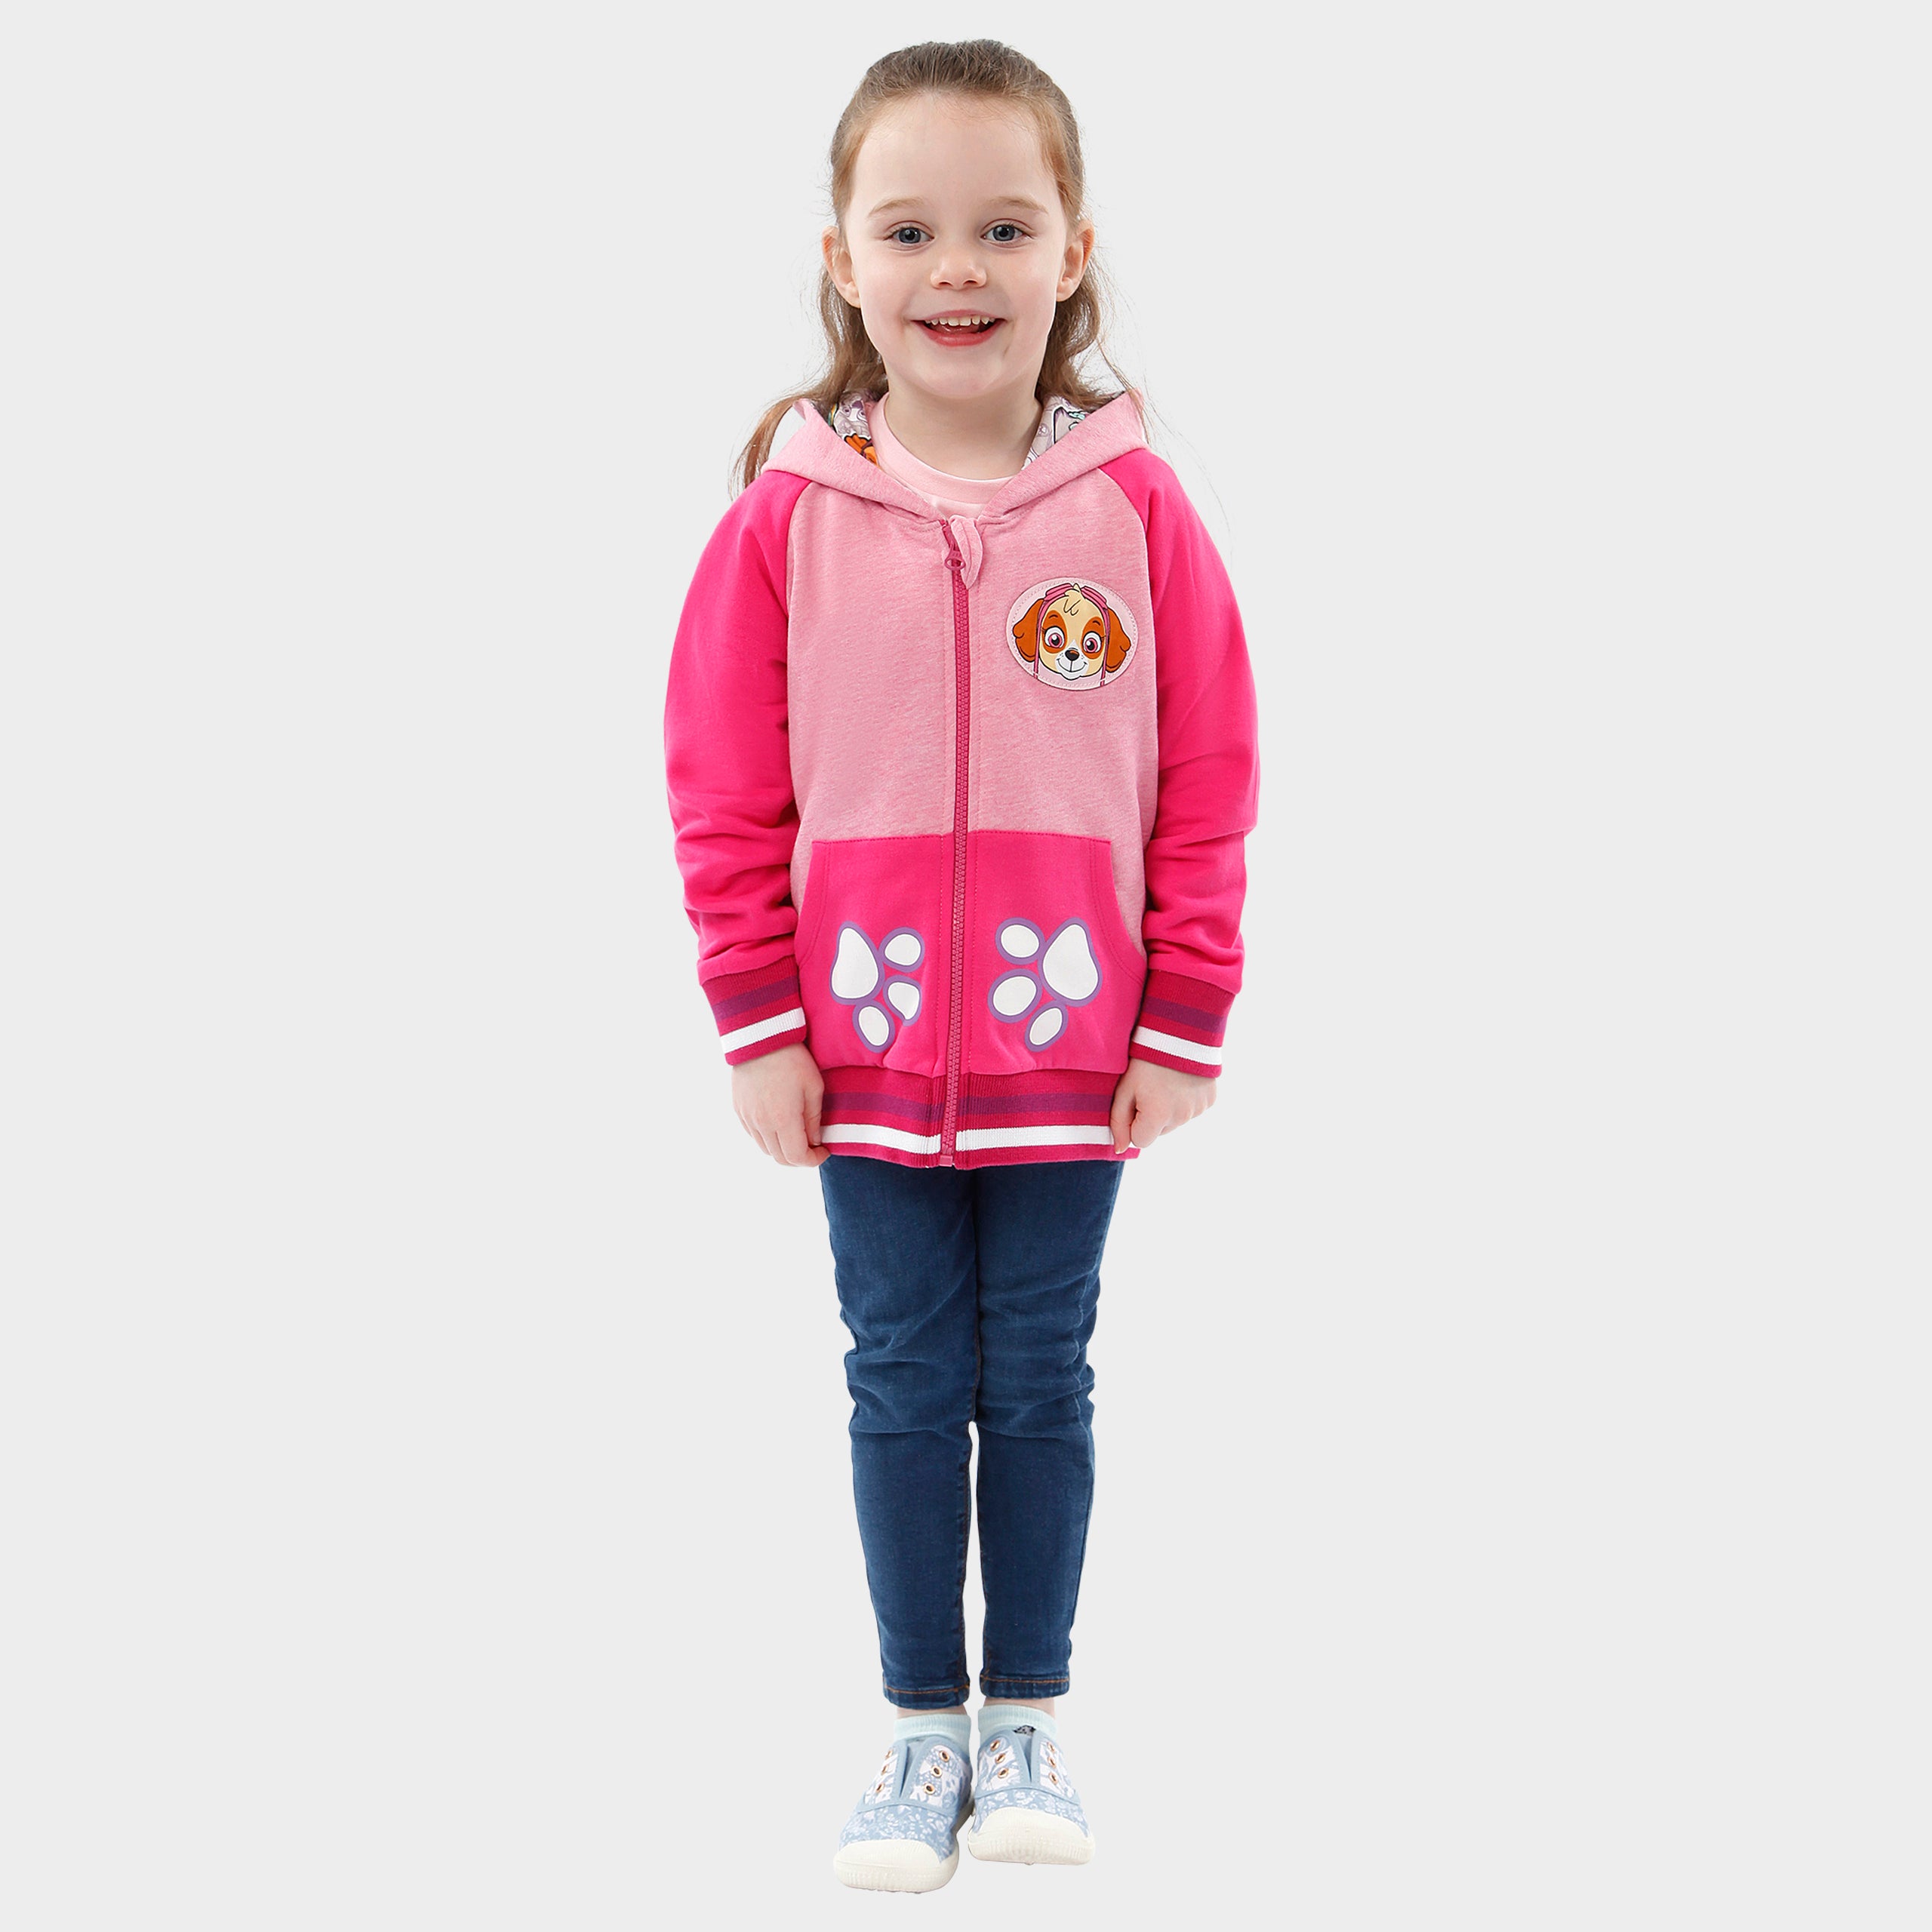 Merchandise Patrol Kids Hoodie Character.com | Paw Buy Official | Girls